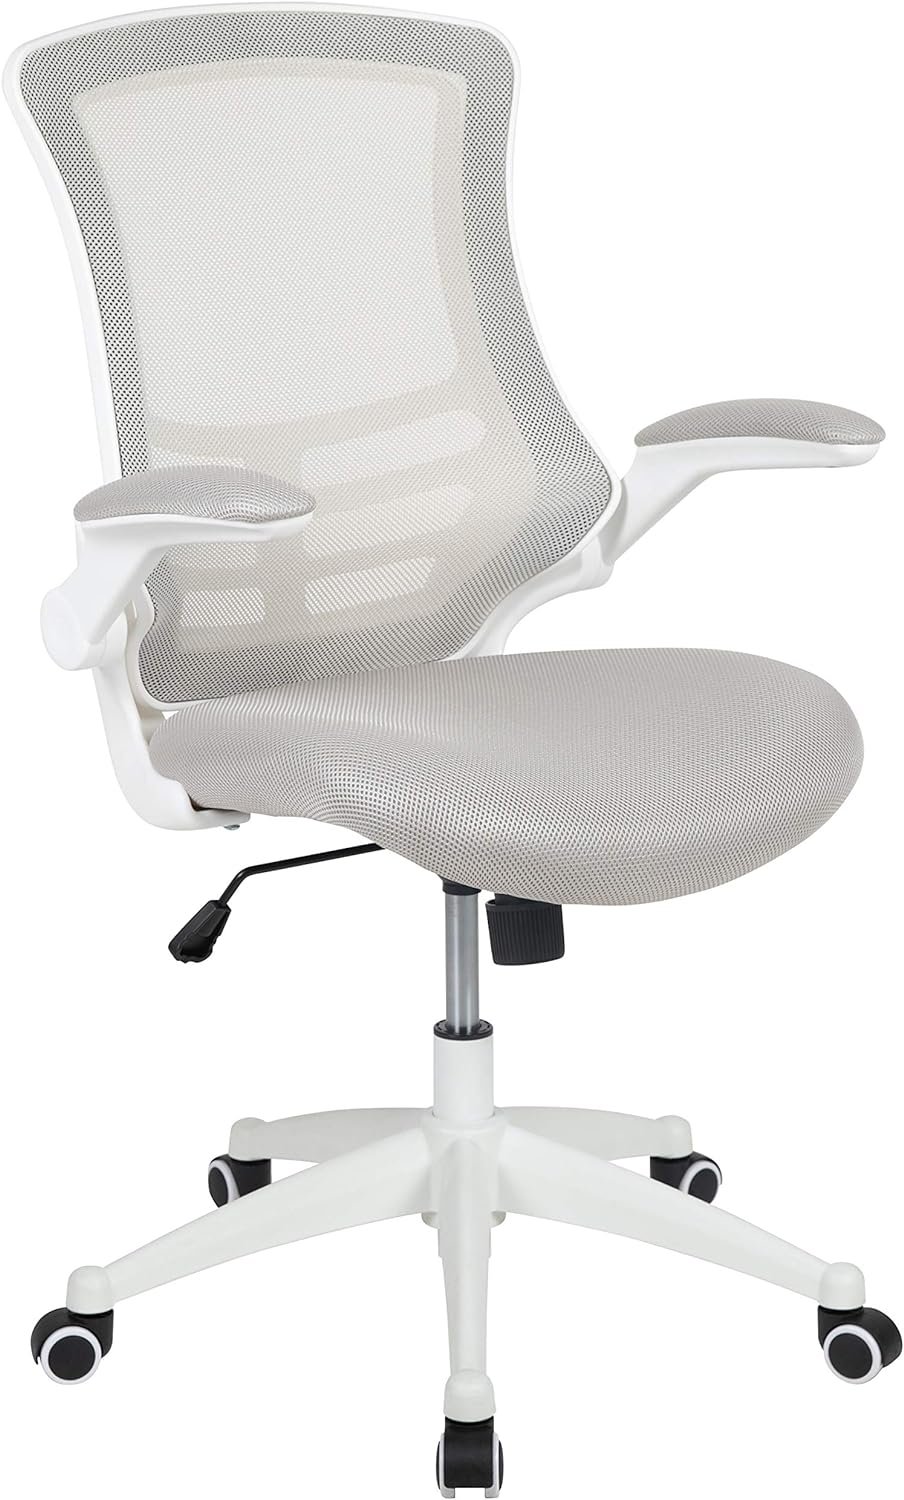 Flash Furniture Kelista Mid-Back Black Mesh Swivel Ergonomic Task Office Chair with Flip-Up Arms